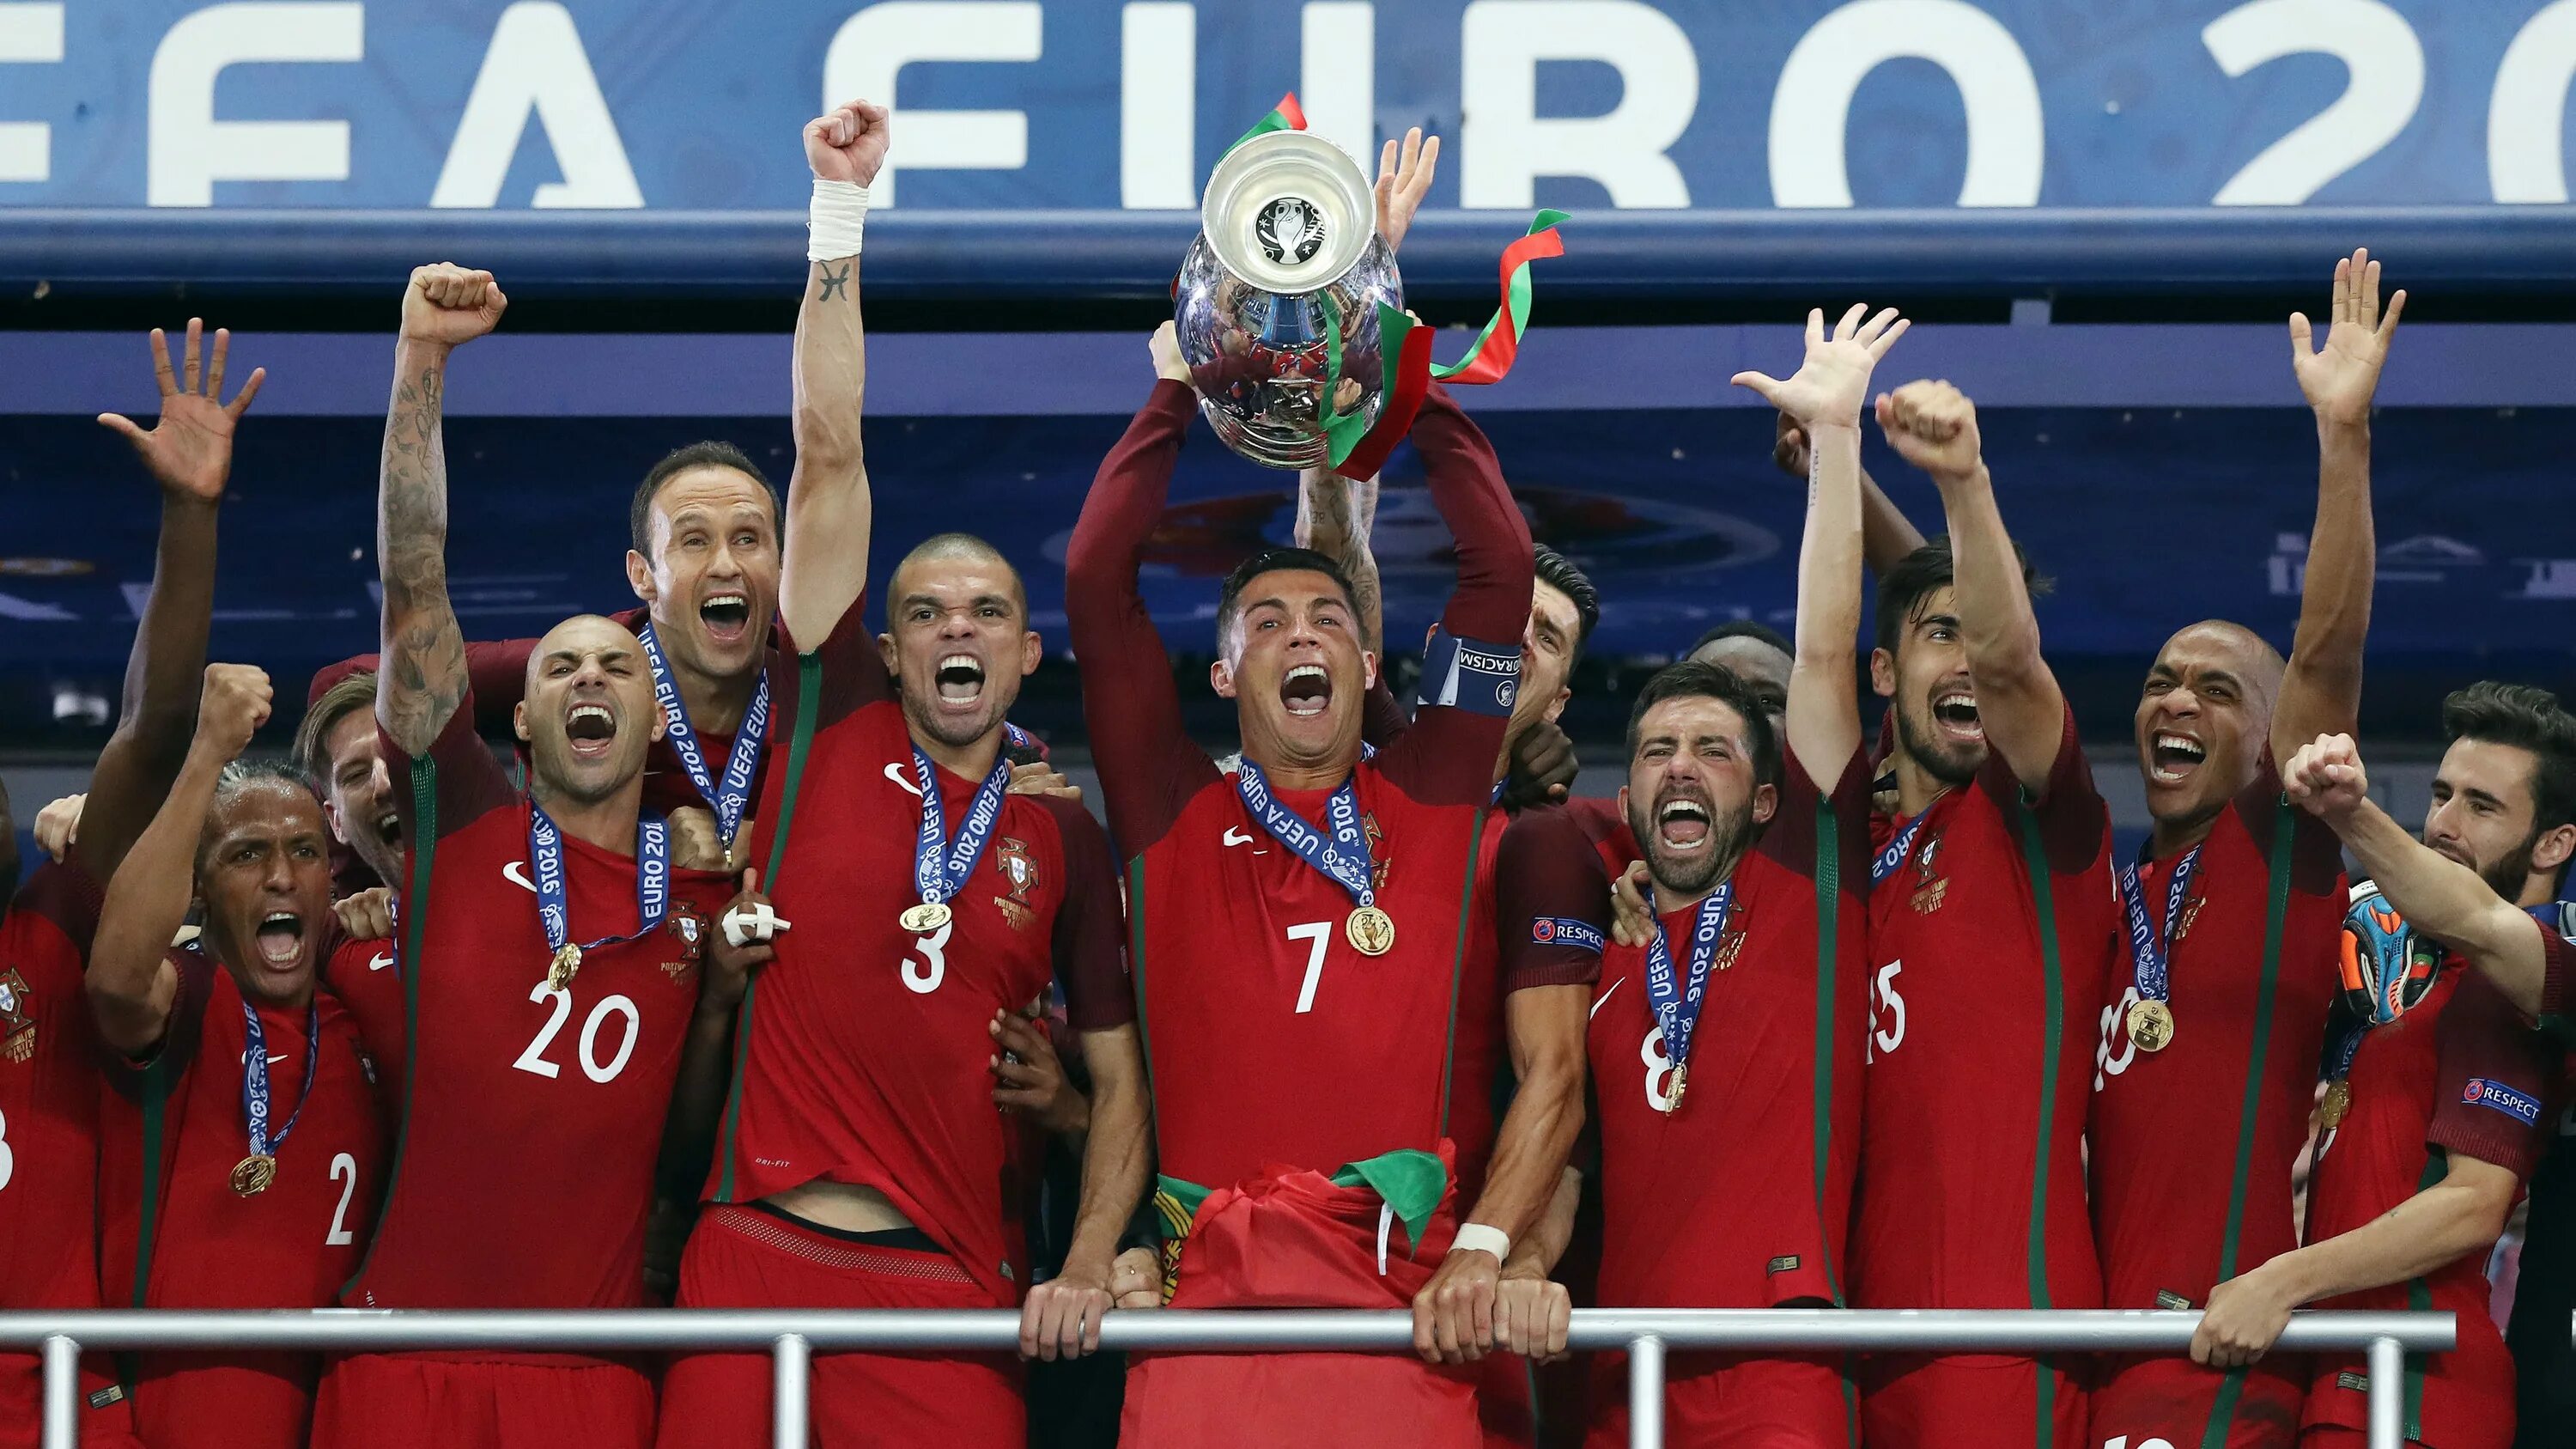 Кубок футбола 2016. Португалия чемпион Европы по футболу 2016. Португалия 2016 чемпион. Чемпионы Европы по футболу 2016 года. Чемпион Европа Португалия футбол.